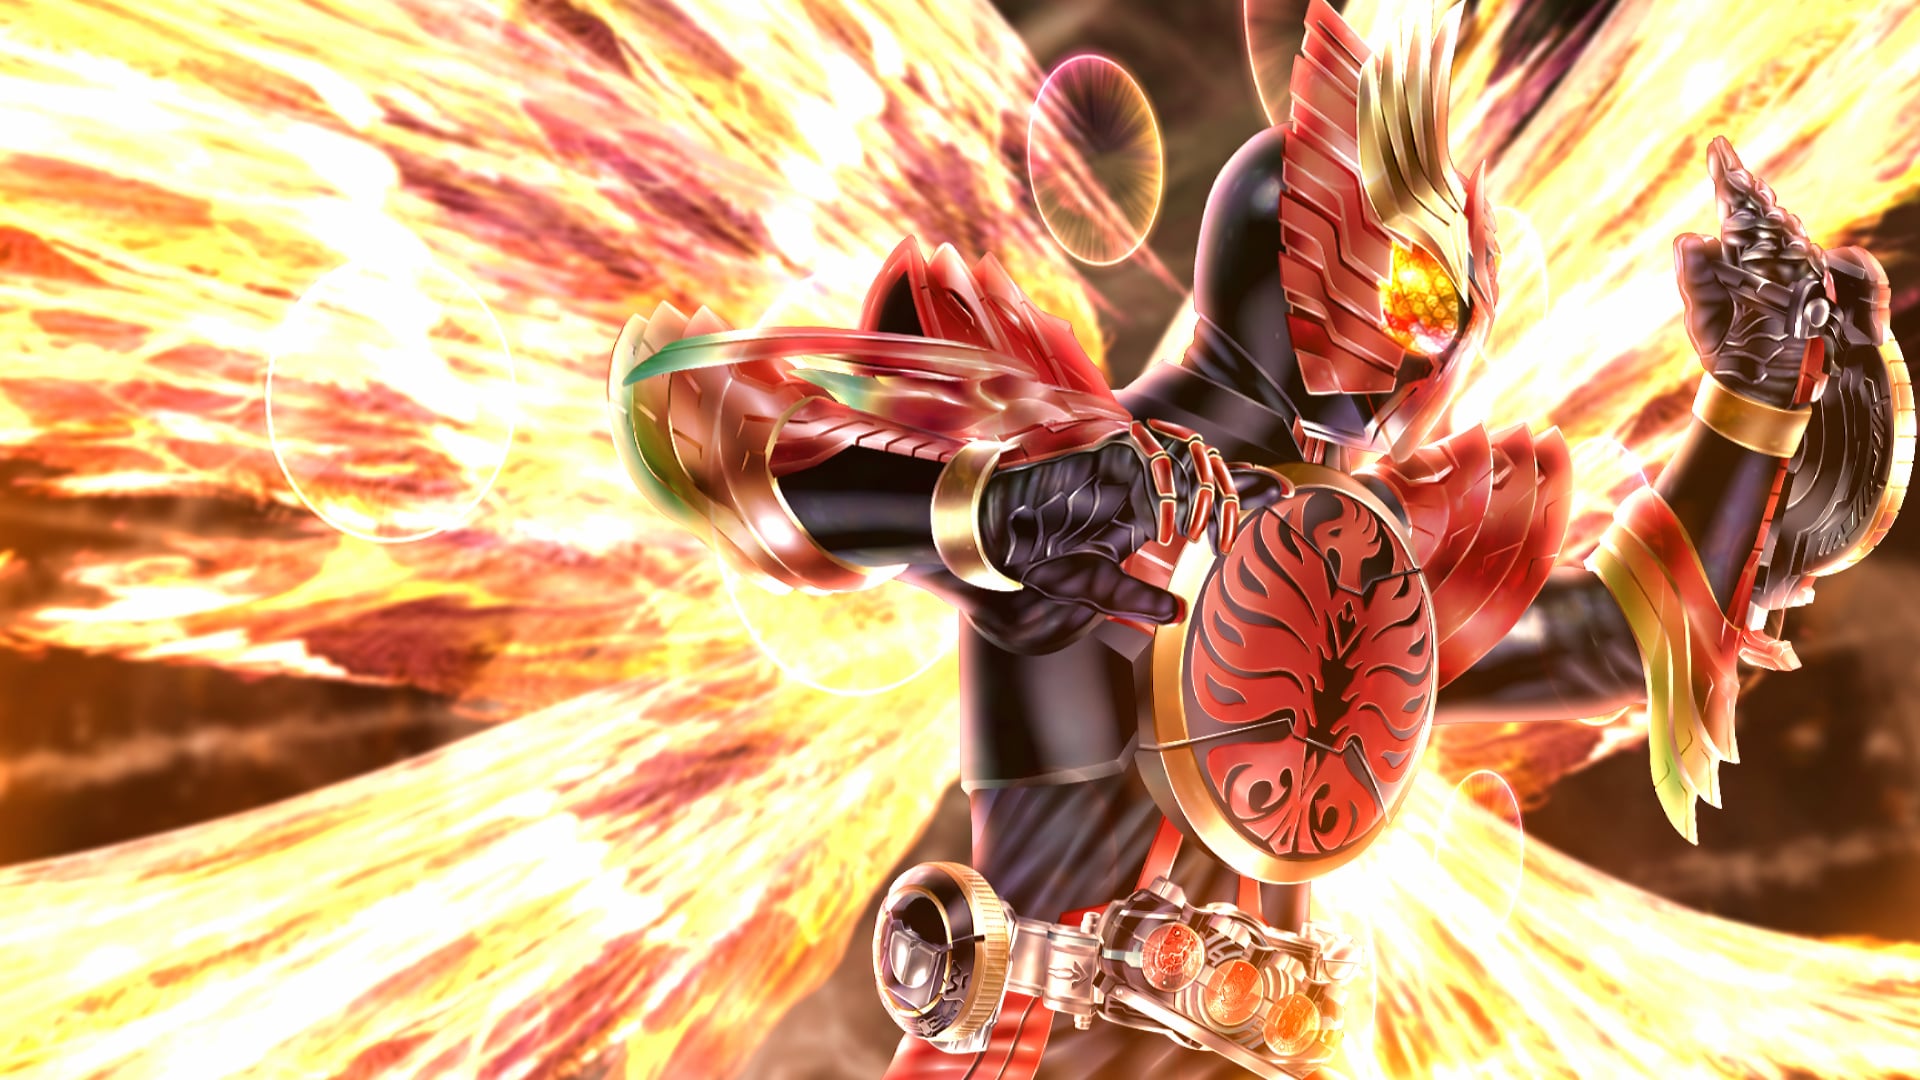 Anime Kamen Rider Ooo wallpapers HD quality